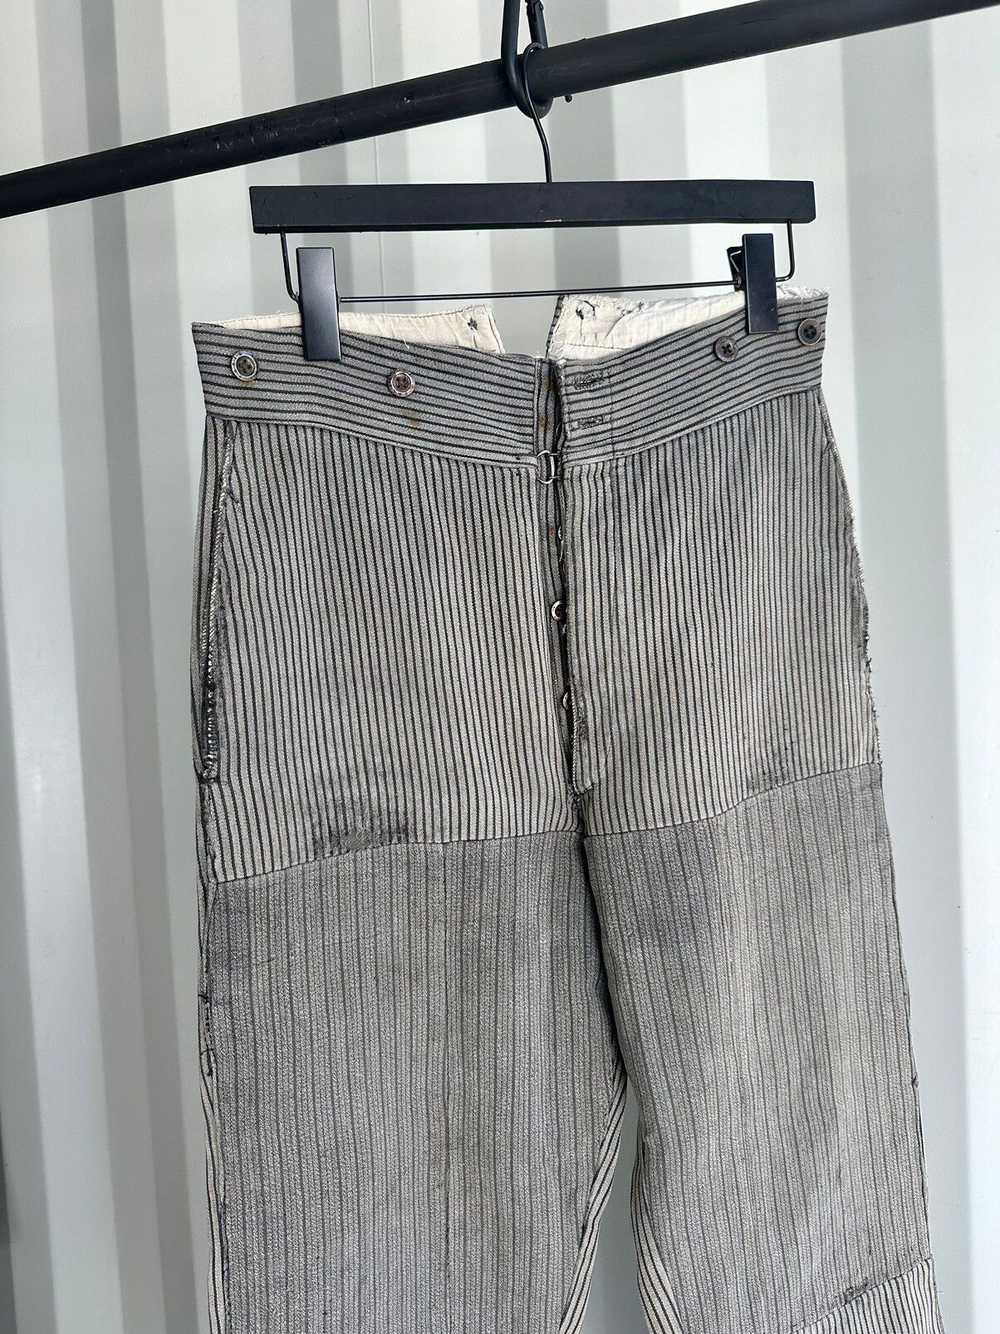 Vintage 20’s French Workwear Chore Pants - image 4